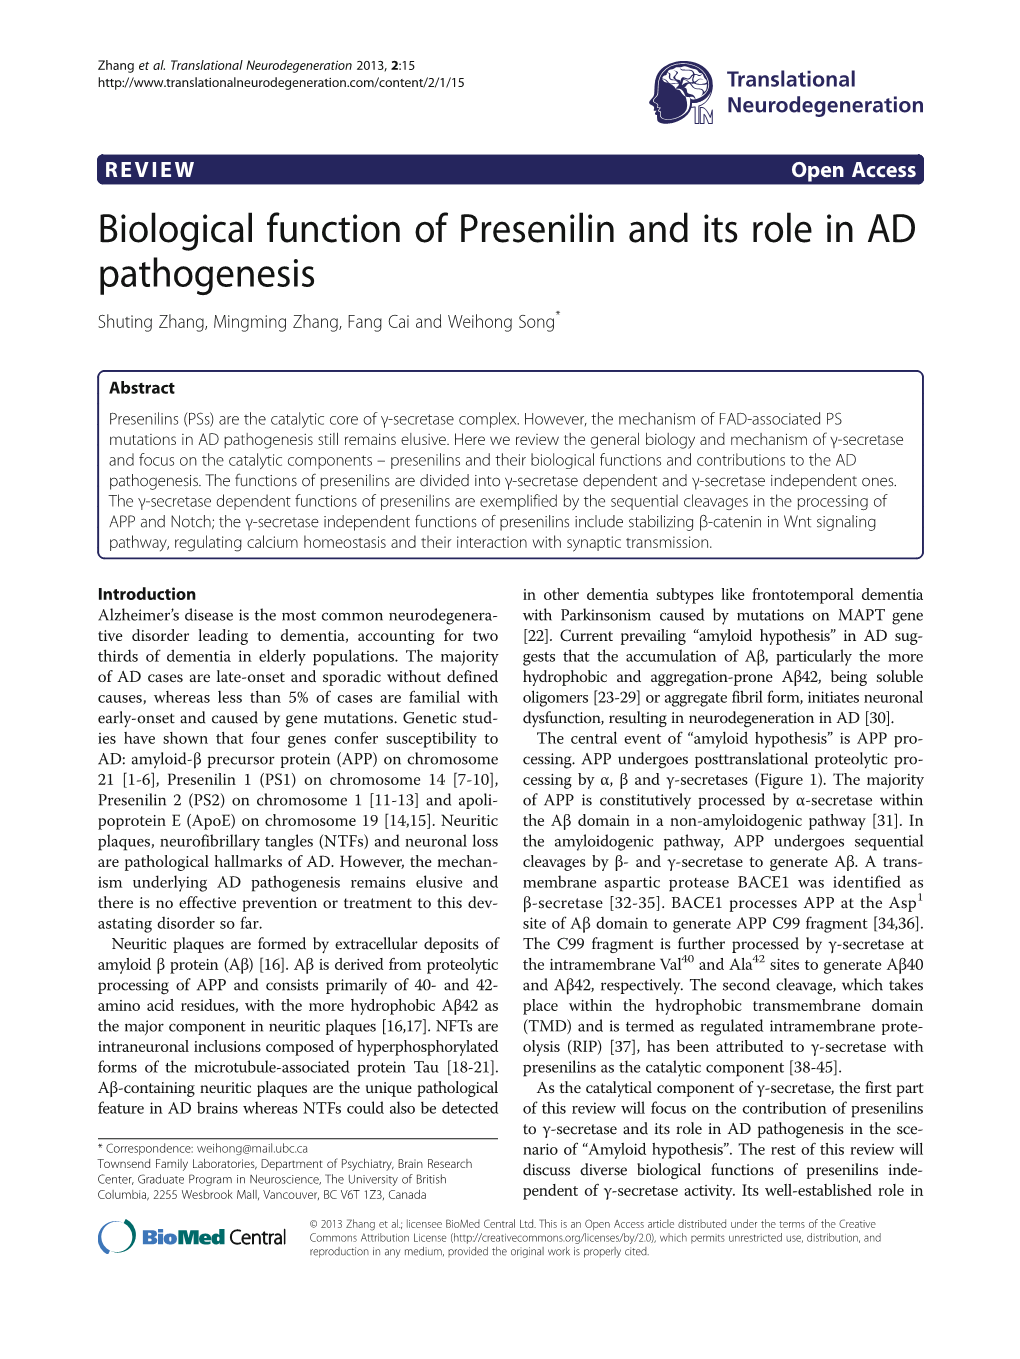 Biological Function of Presenilin and Its Role in AD Pathogenesis Shuting Zhang, Mingming Zhang, Fang Cai and Weihong Song*